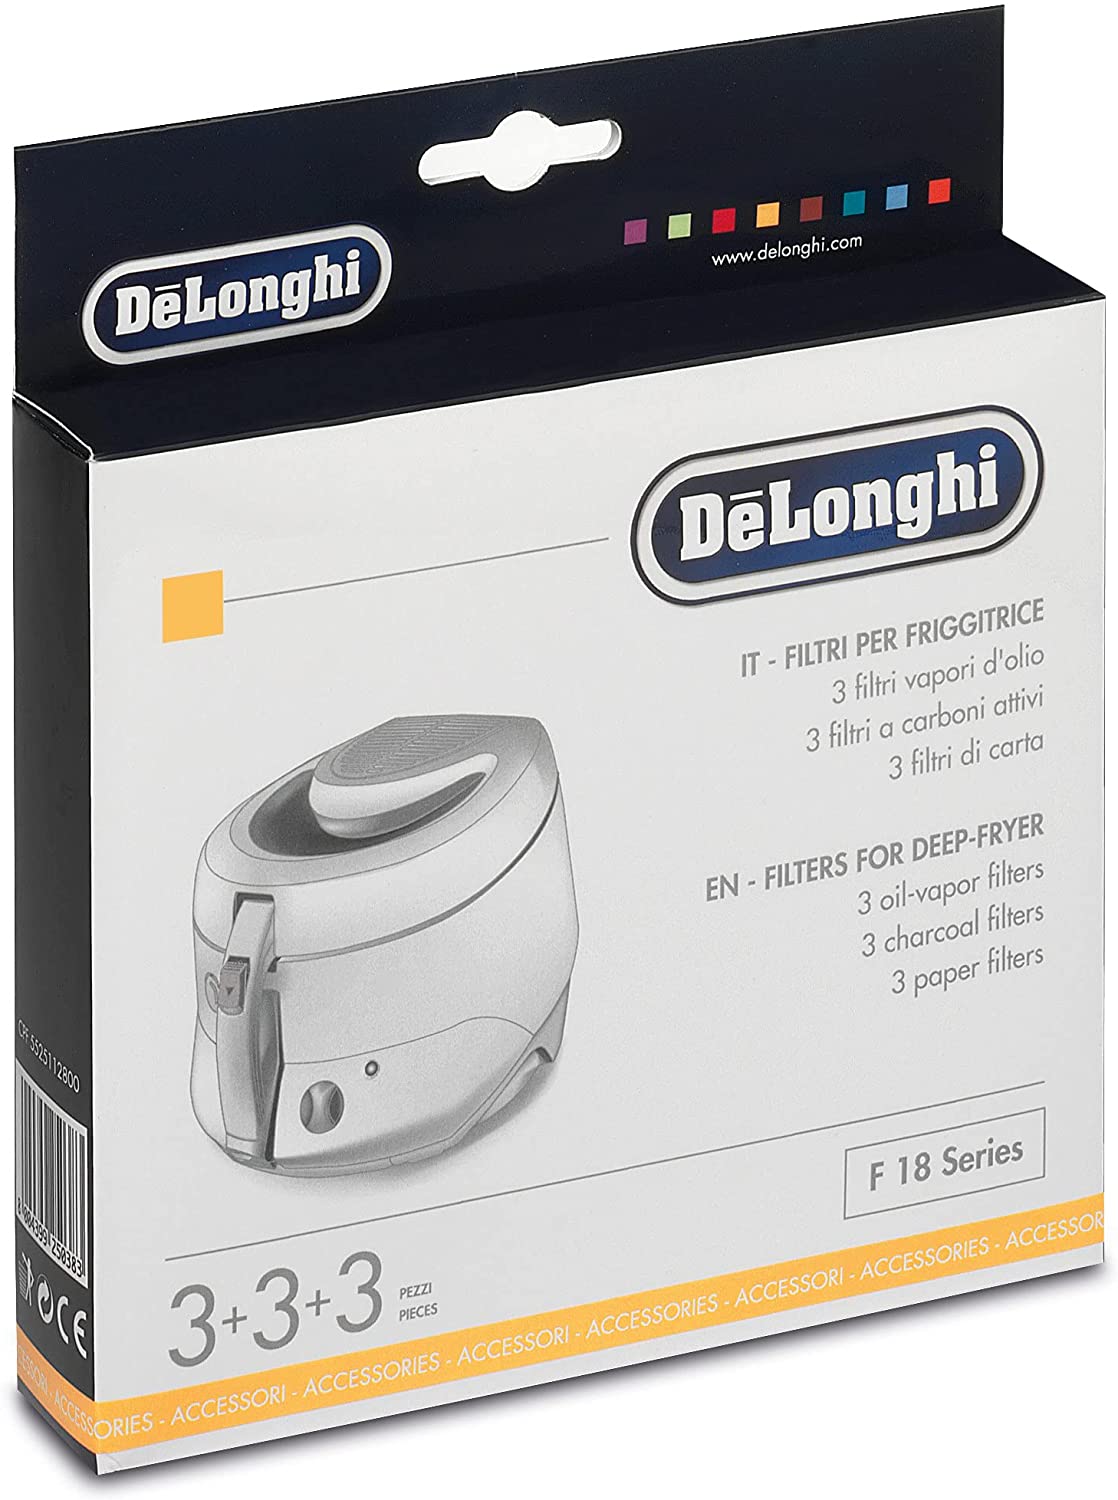 DeLonghi FIL.F18 Filter Set for Fryers (Models: F18233, F18316, F18436), Black/White